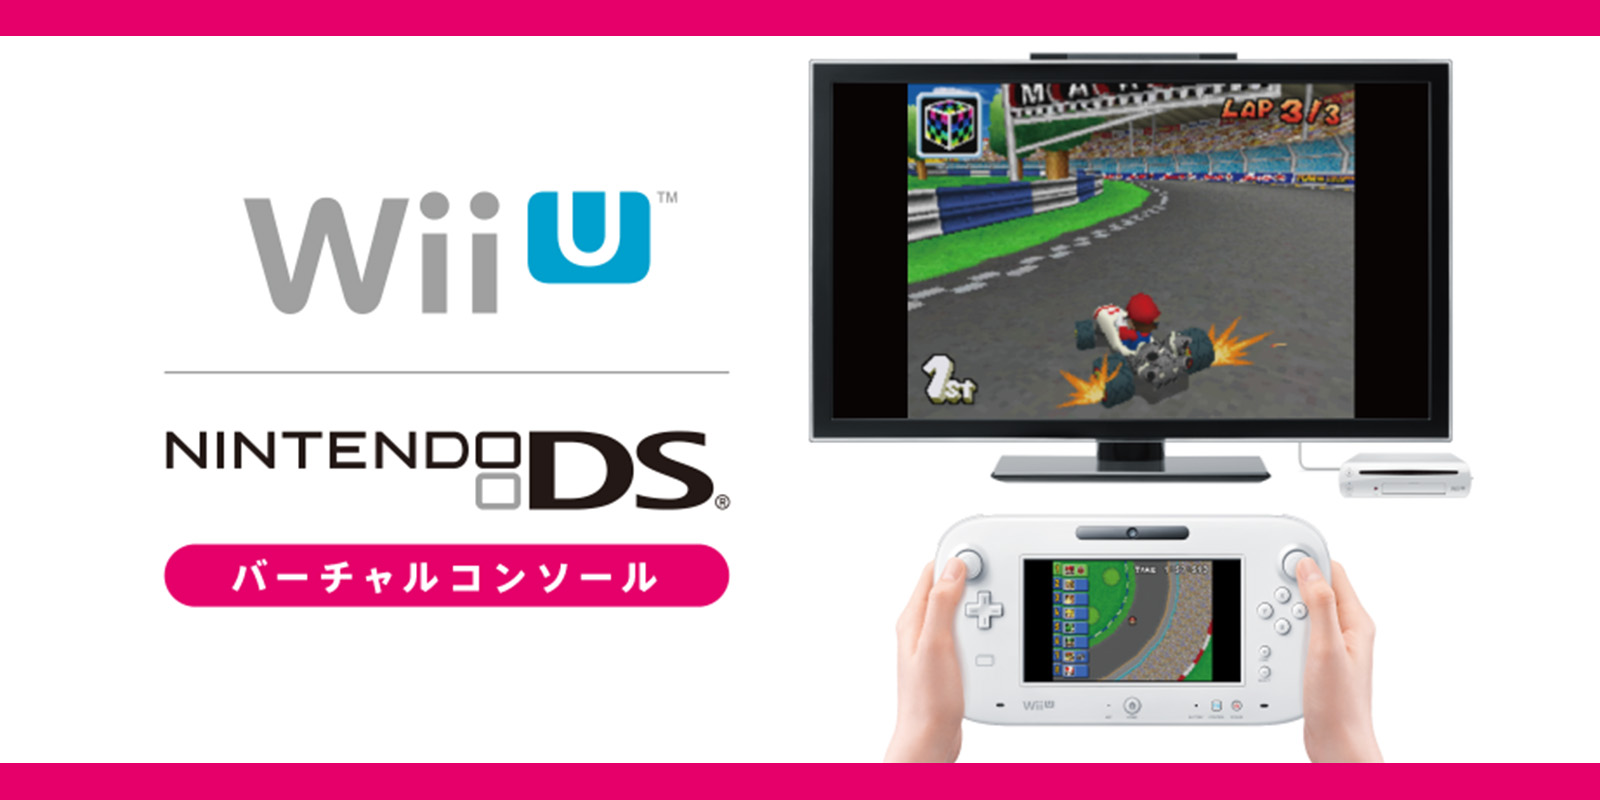 NERD Creates a High Speed, High Quality Nintendo DS Emulator for Wii U